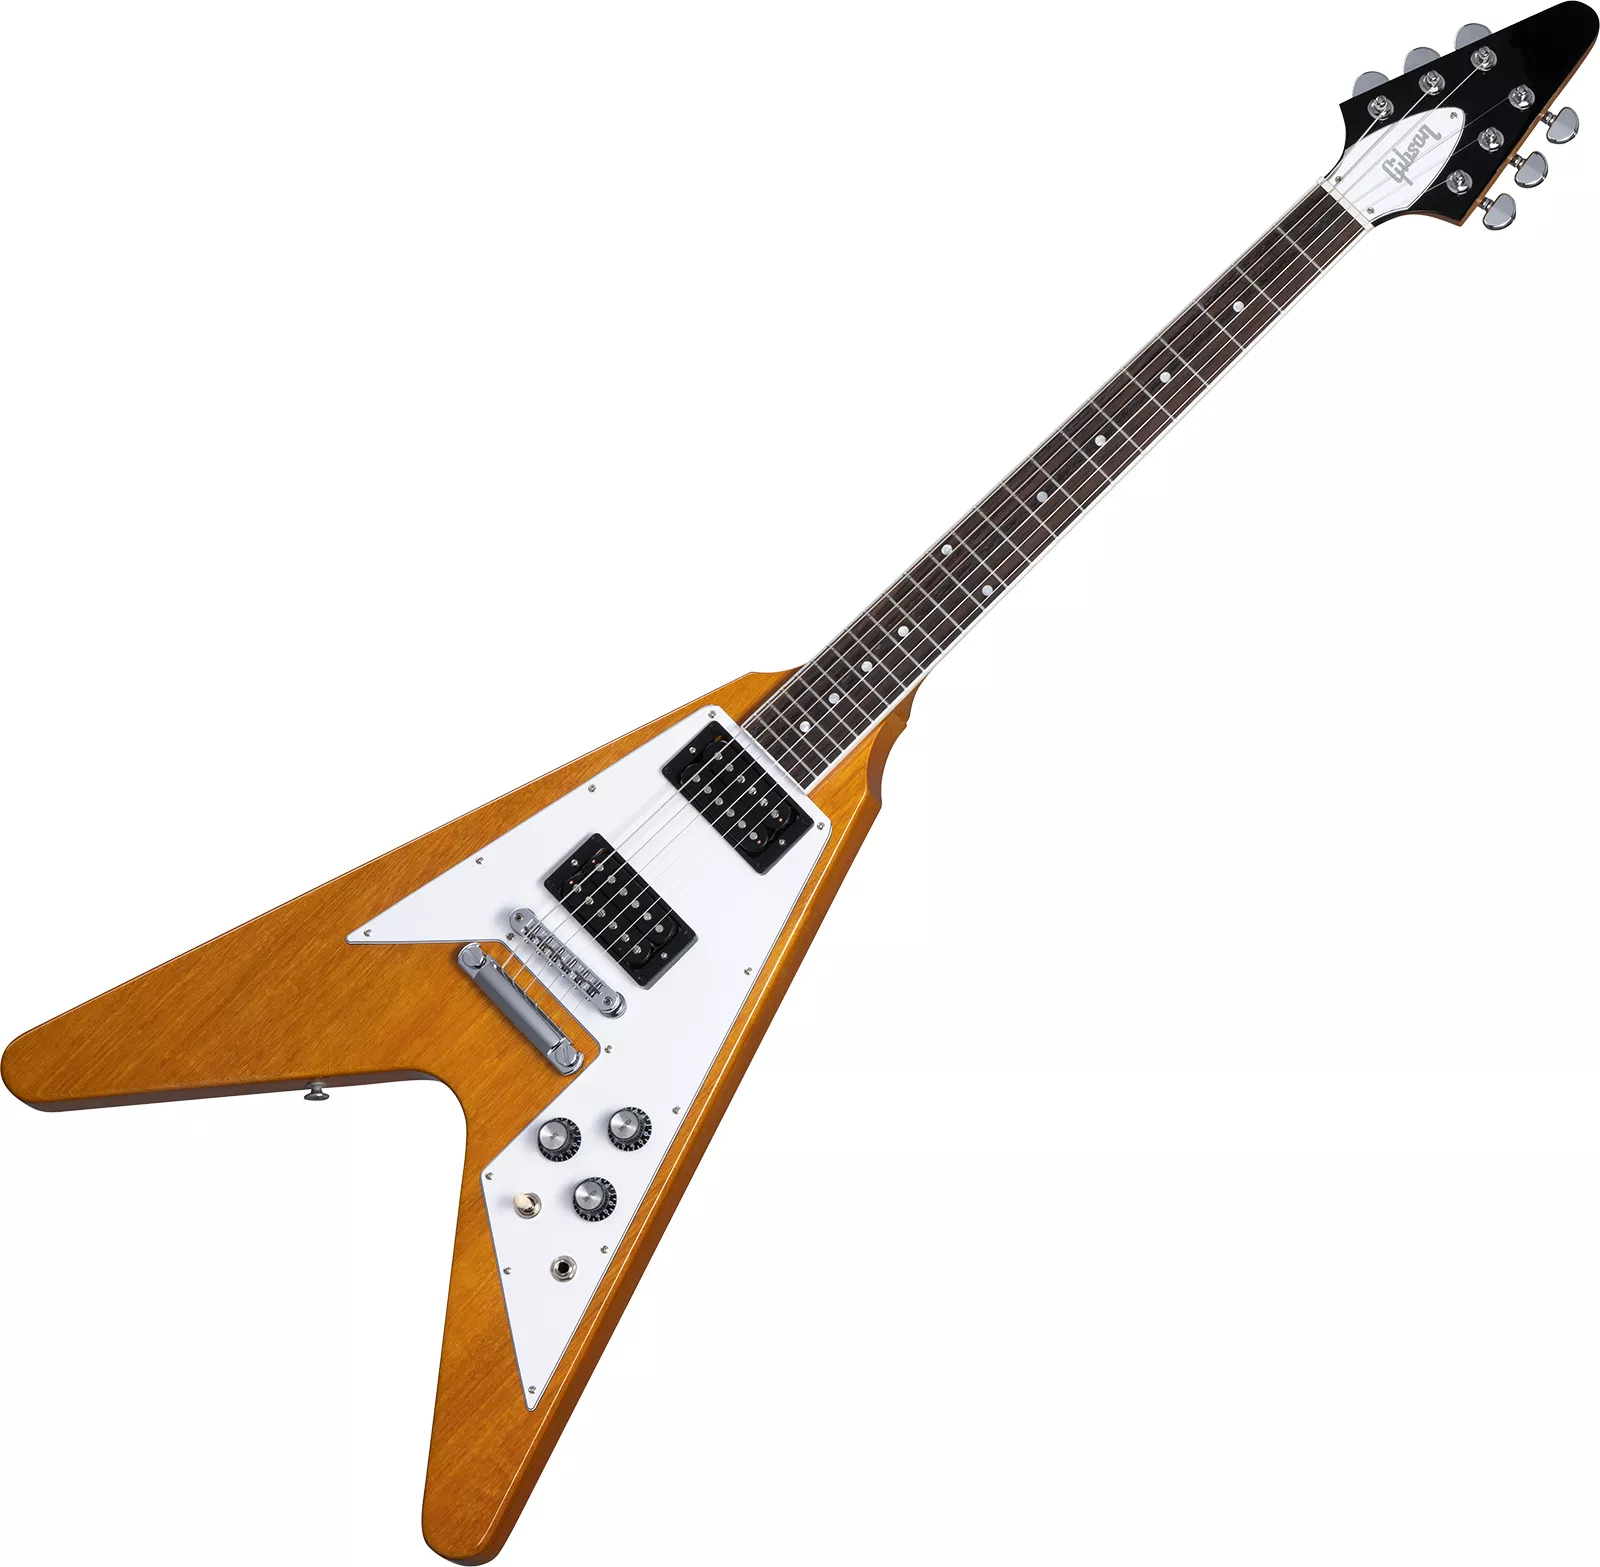 Gibson 70s Flying V Antique Natural guitare électrique avec